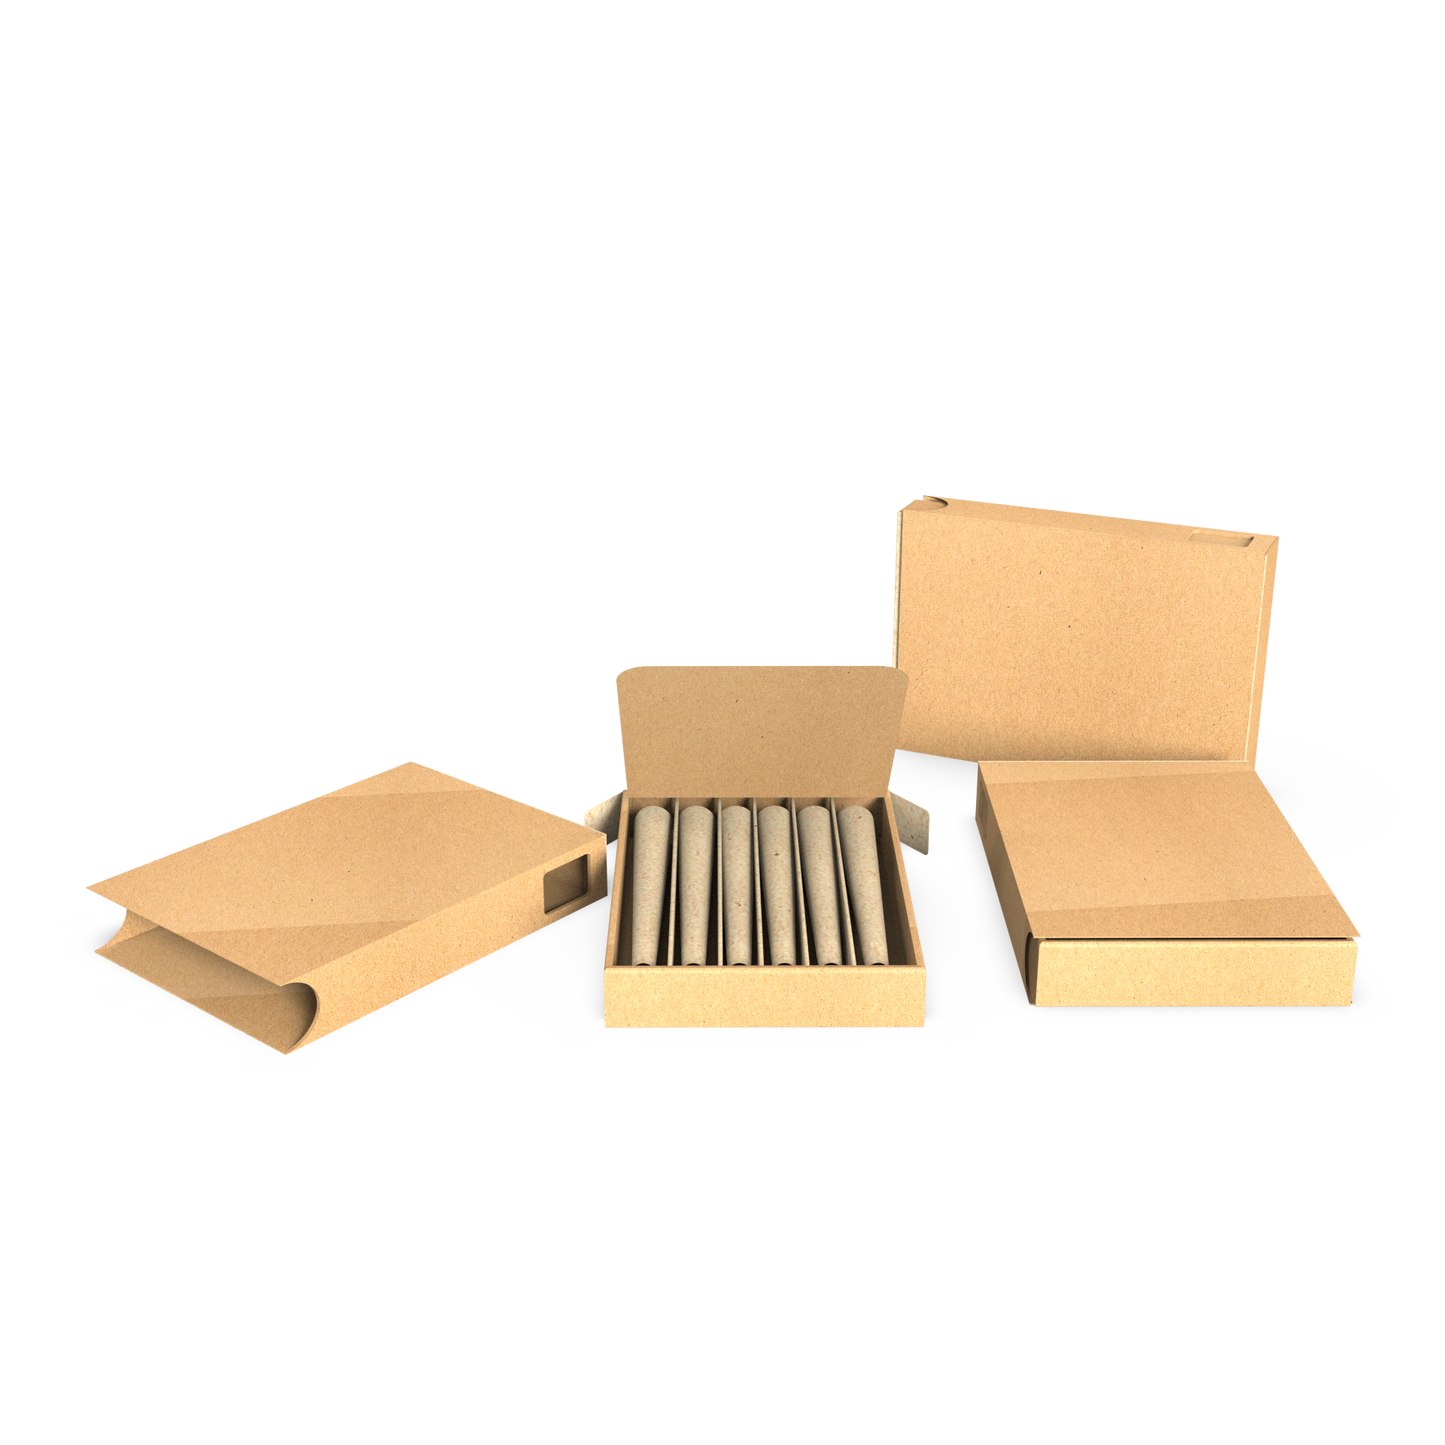 Child-resistant Paper Box (Plastic-free)